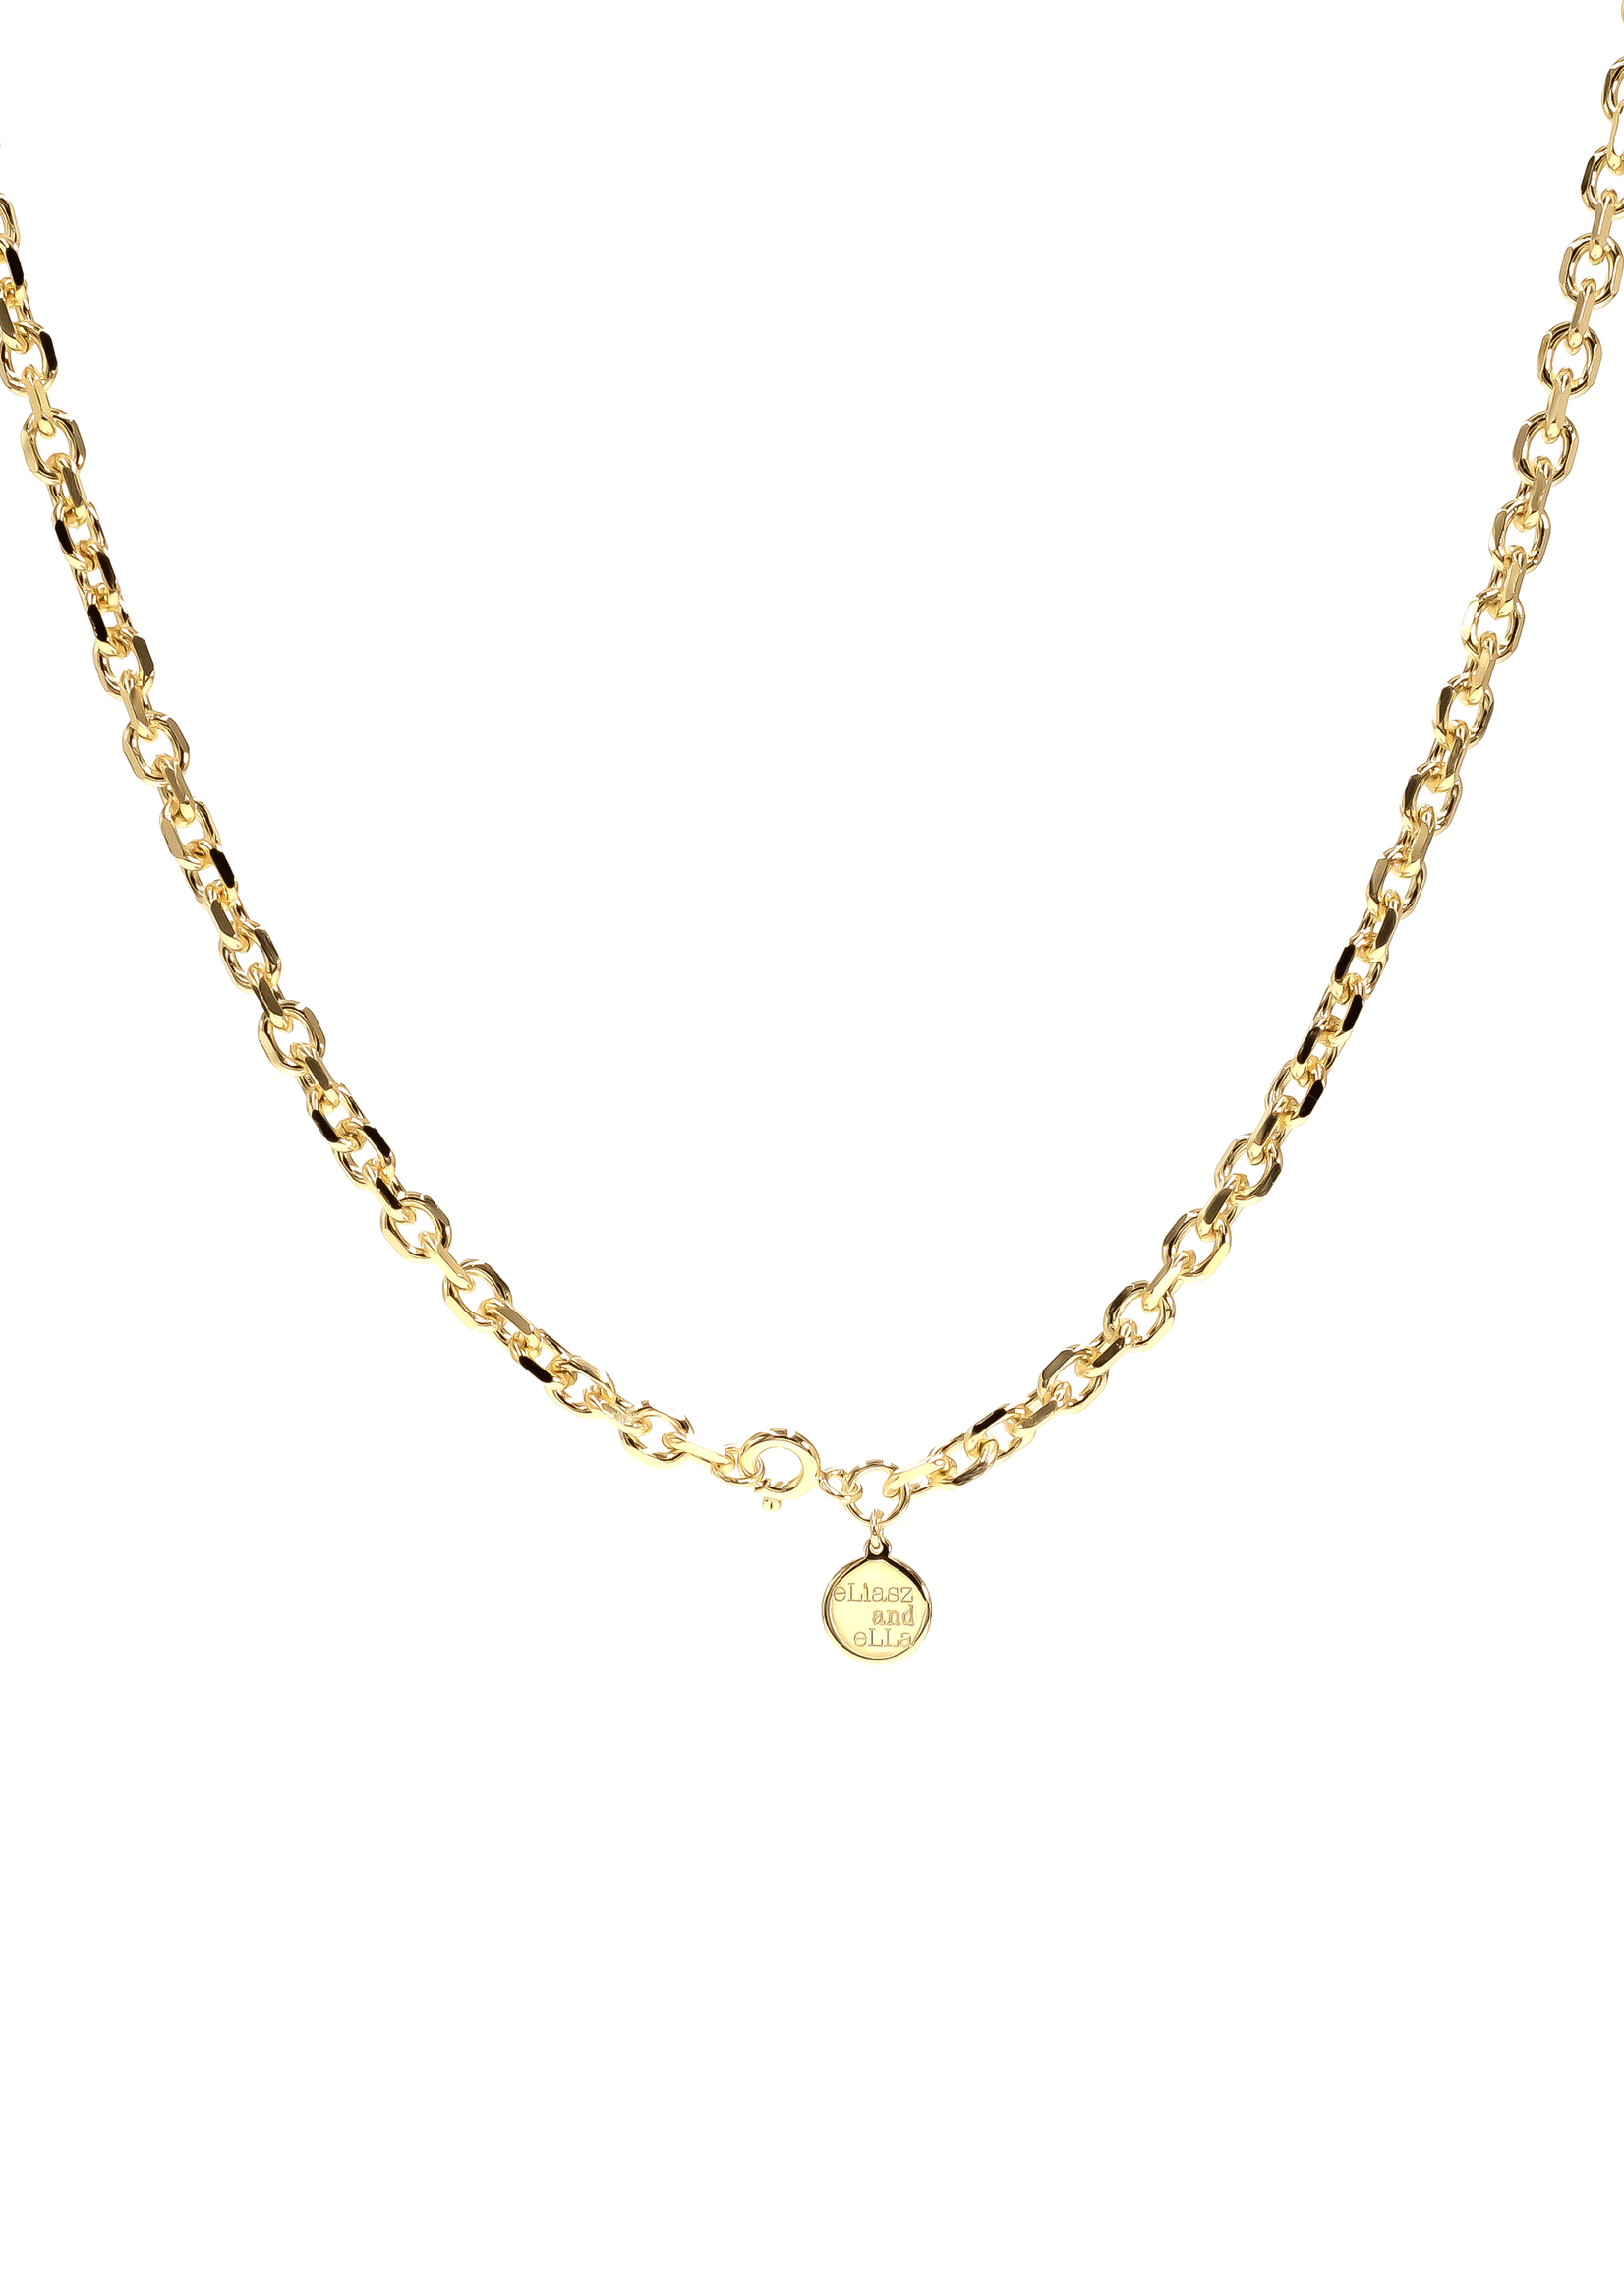 eLiasz and eLLa Jewelry Inc. Cherish Link Necklace